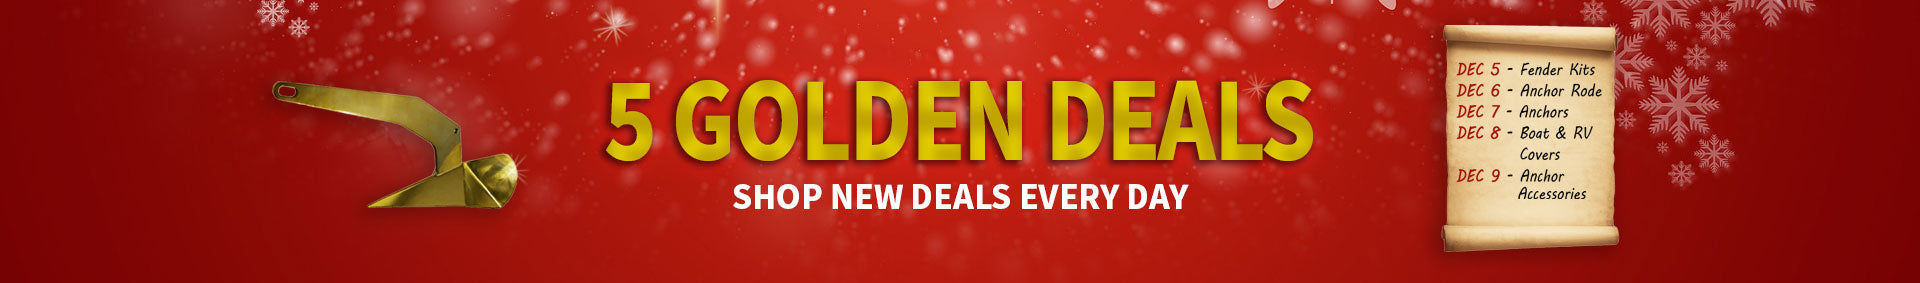 5 Golden Deals - Covers